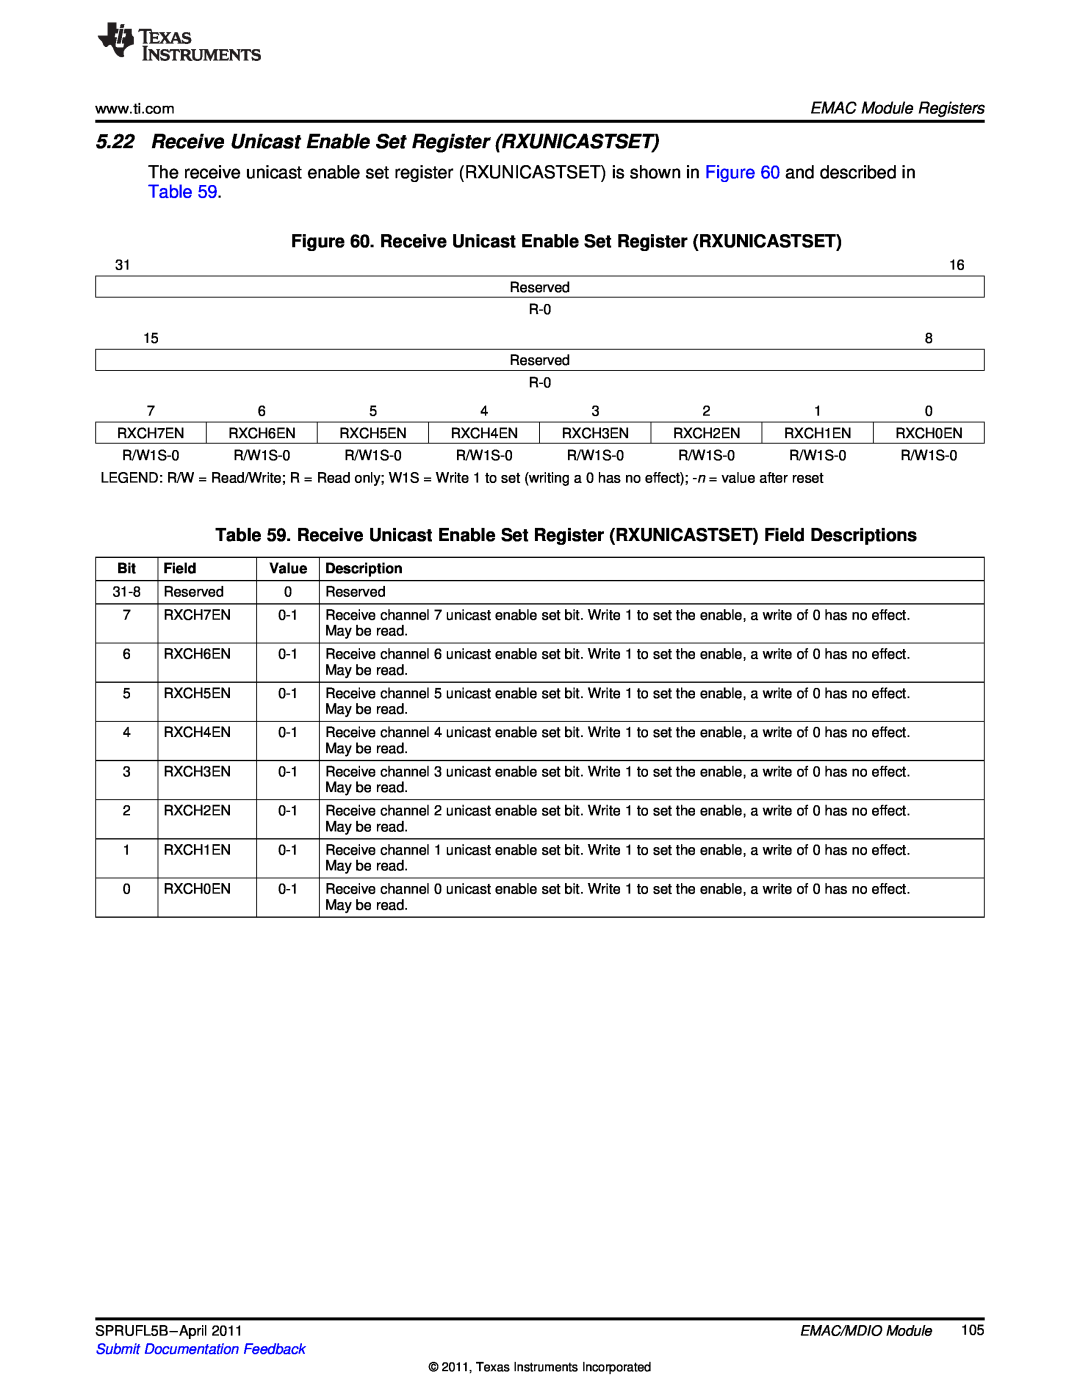 Texas Instruments TMS320C674X manual Receive Unicast Enable Set Register RXUNICASTSET, EMAC Module Registers, Field, Value 